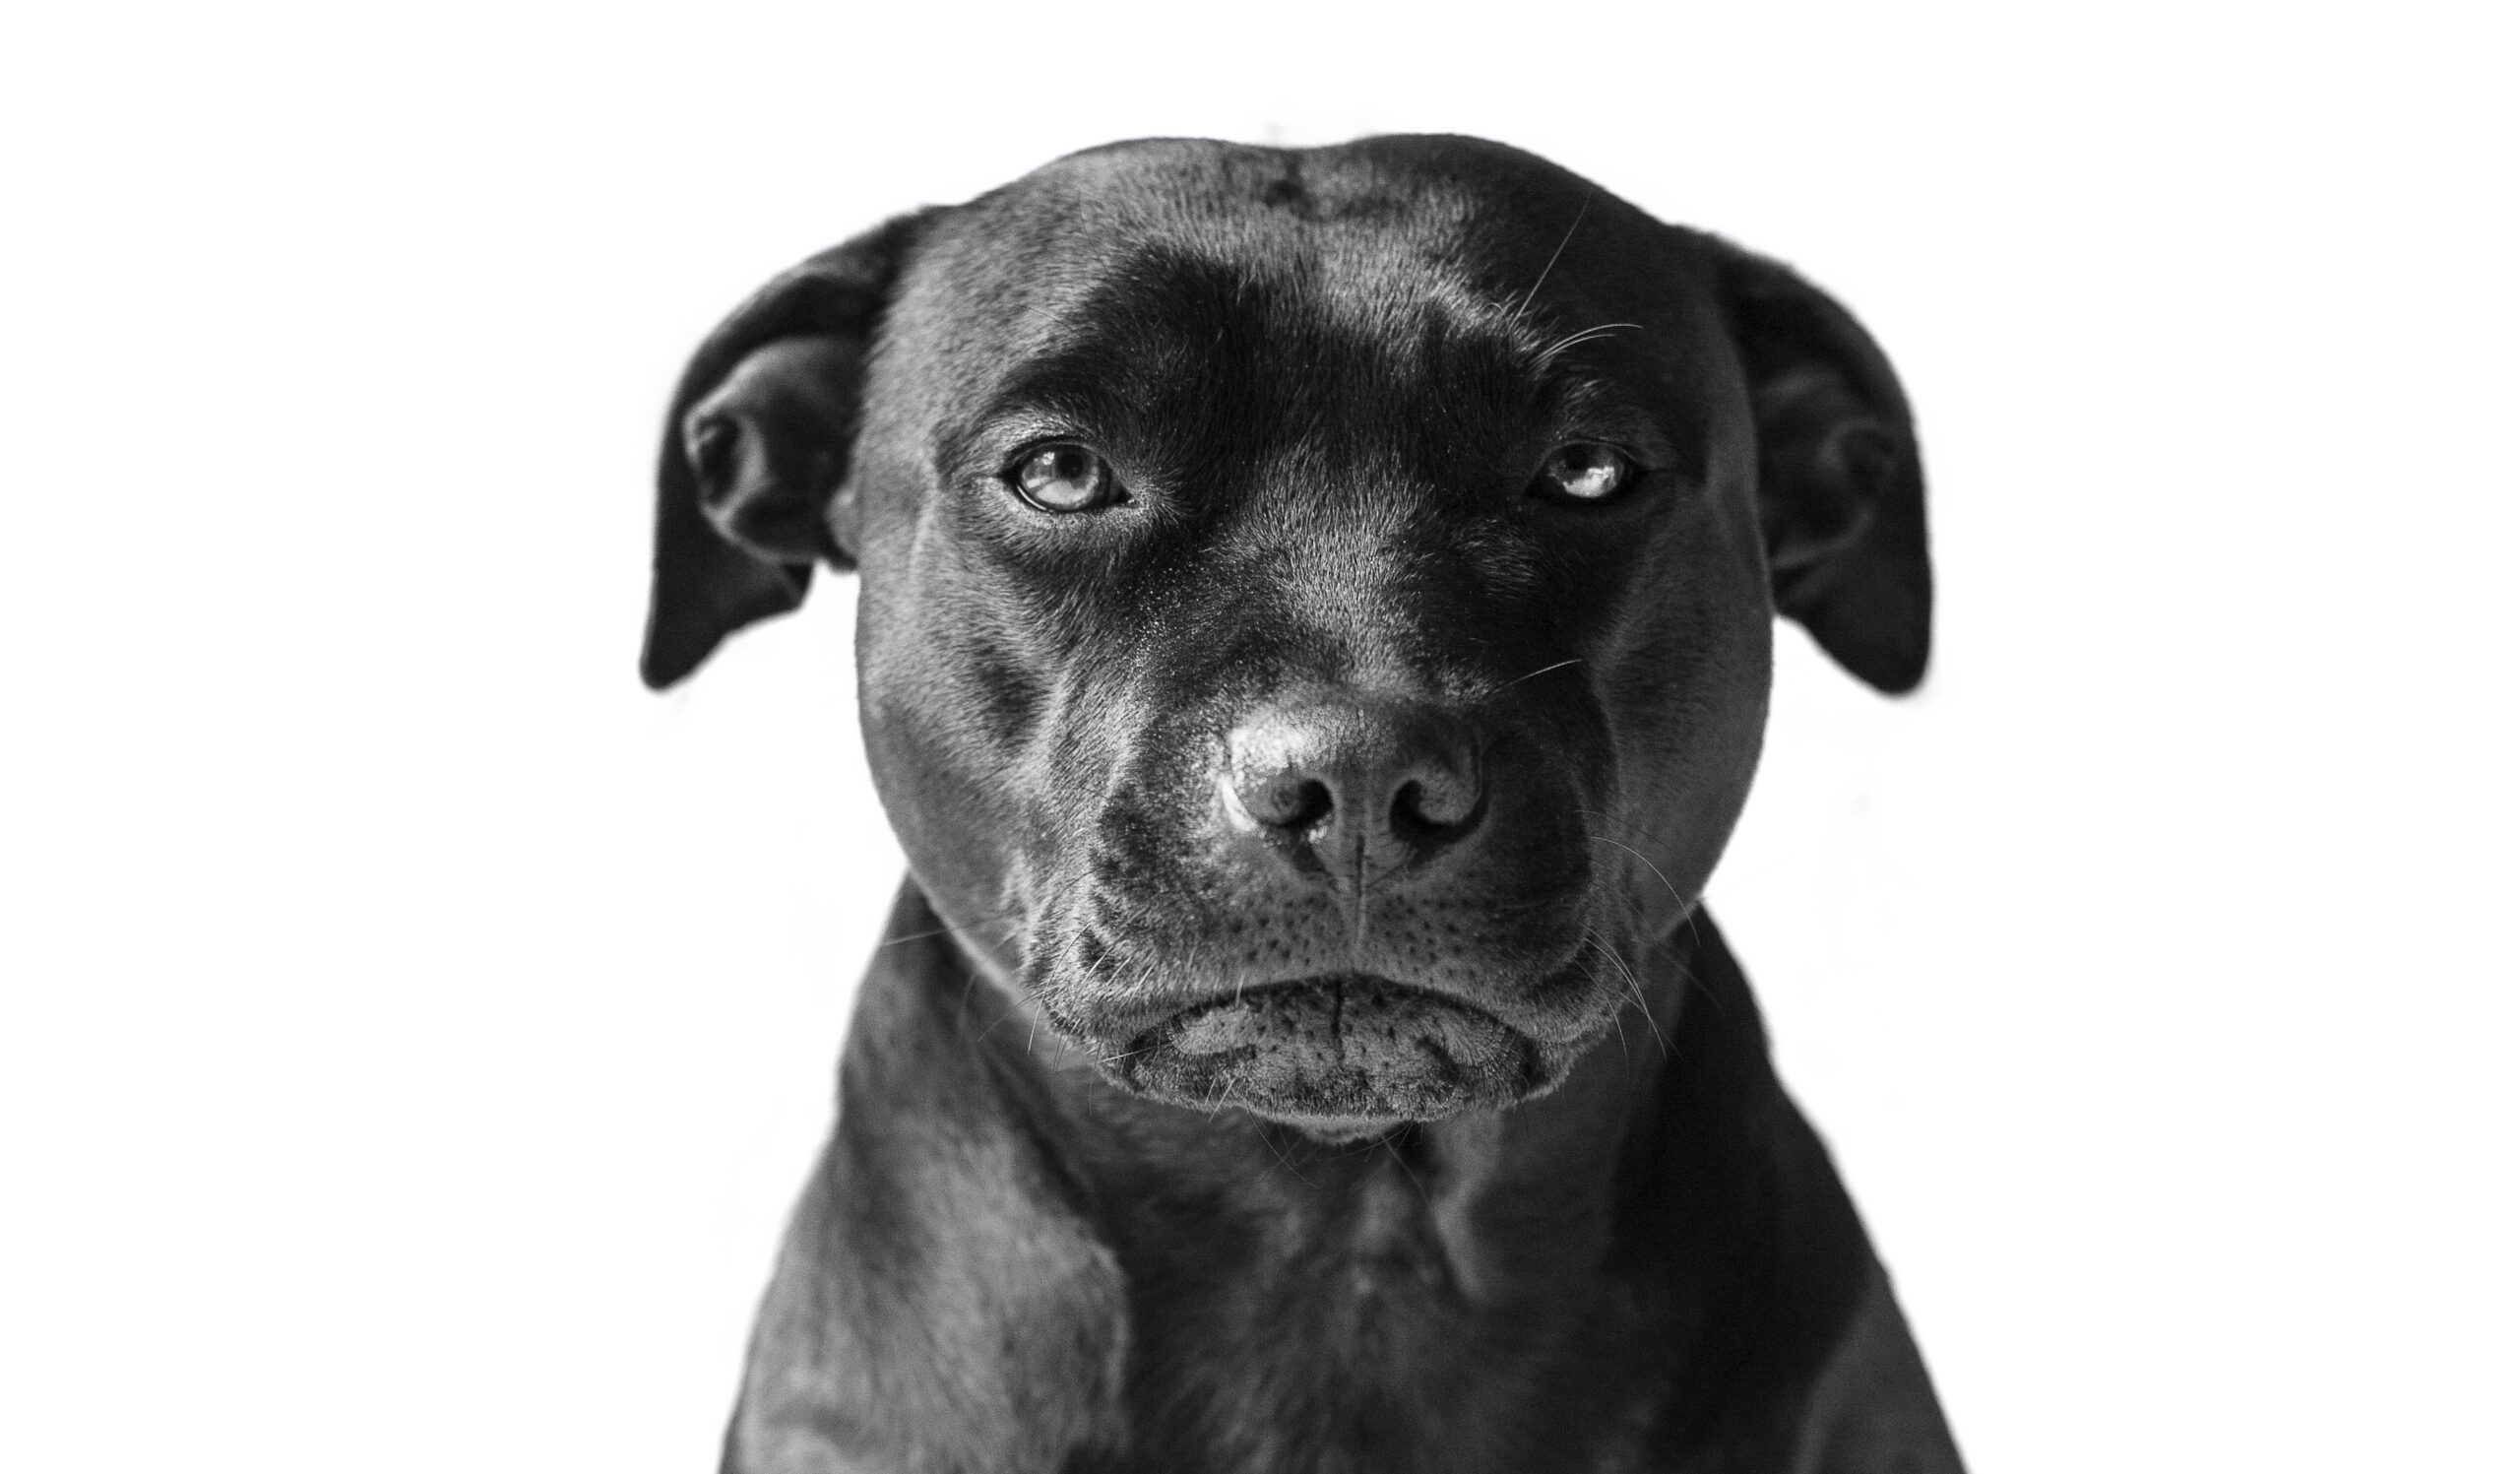 victor Grabarczyk black dog image from Unsplash